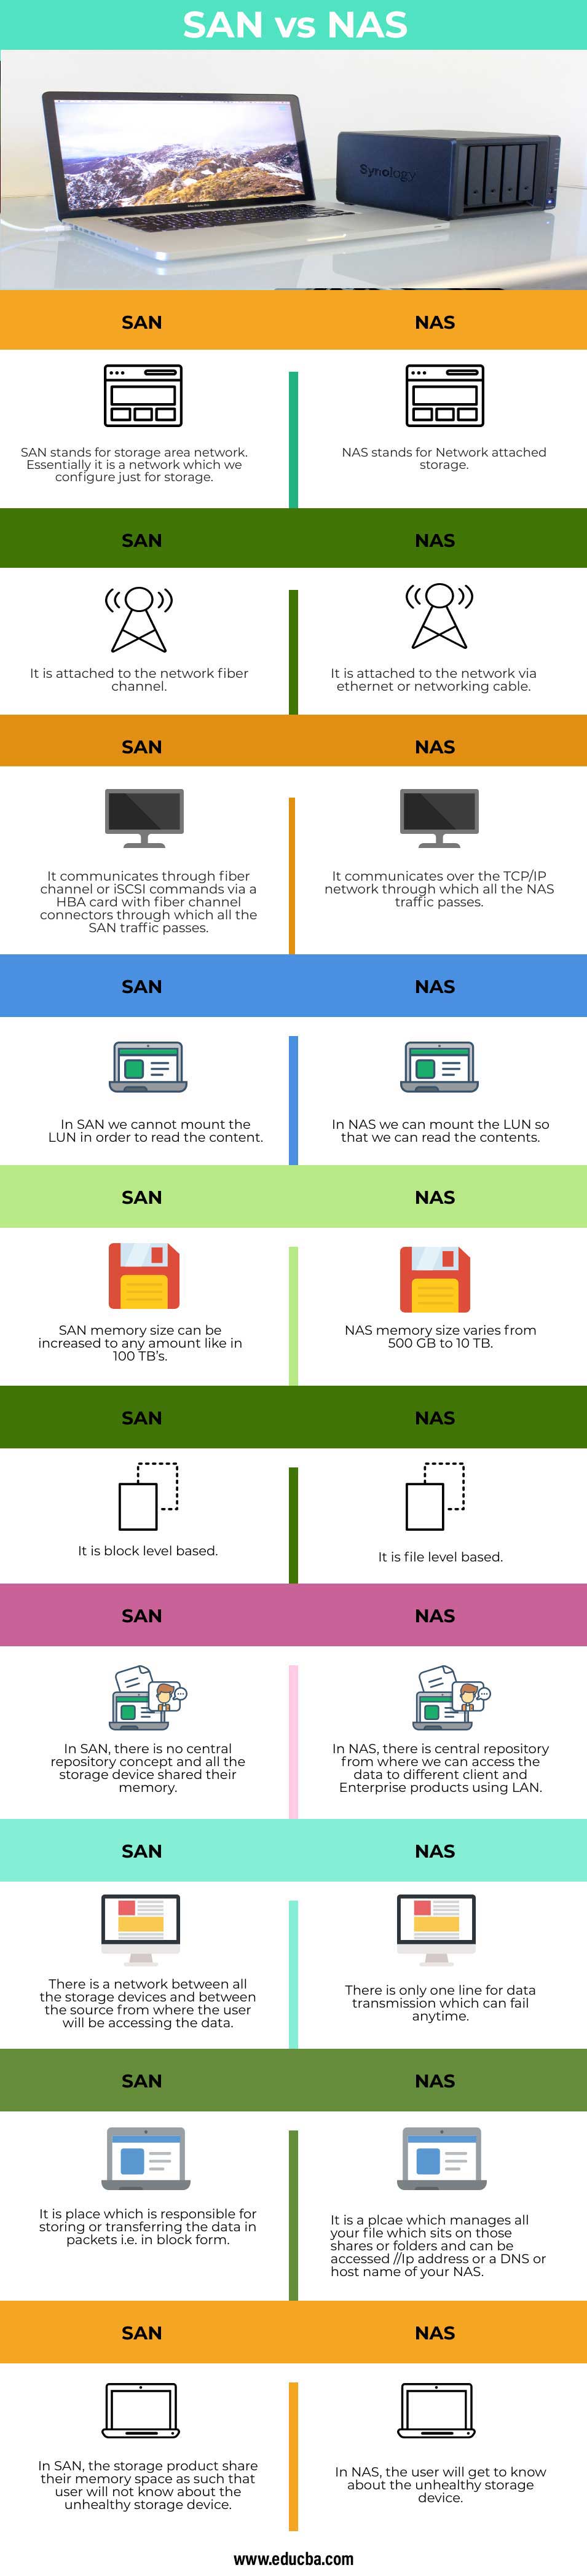 SAN-vs-NAS-info